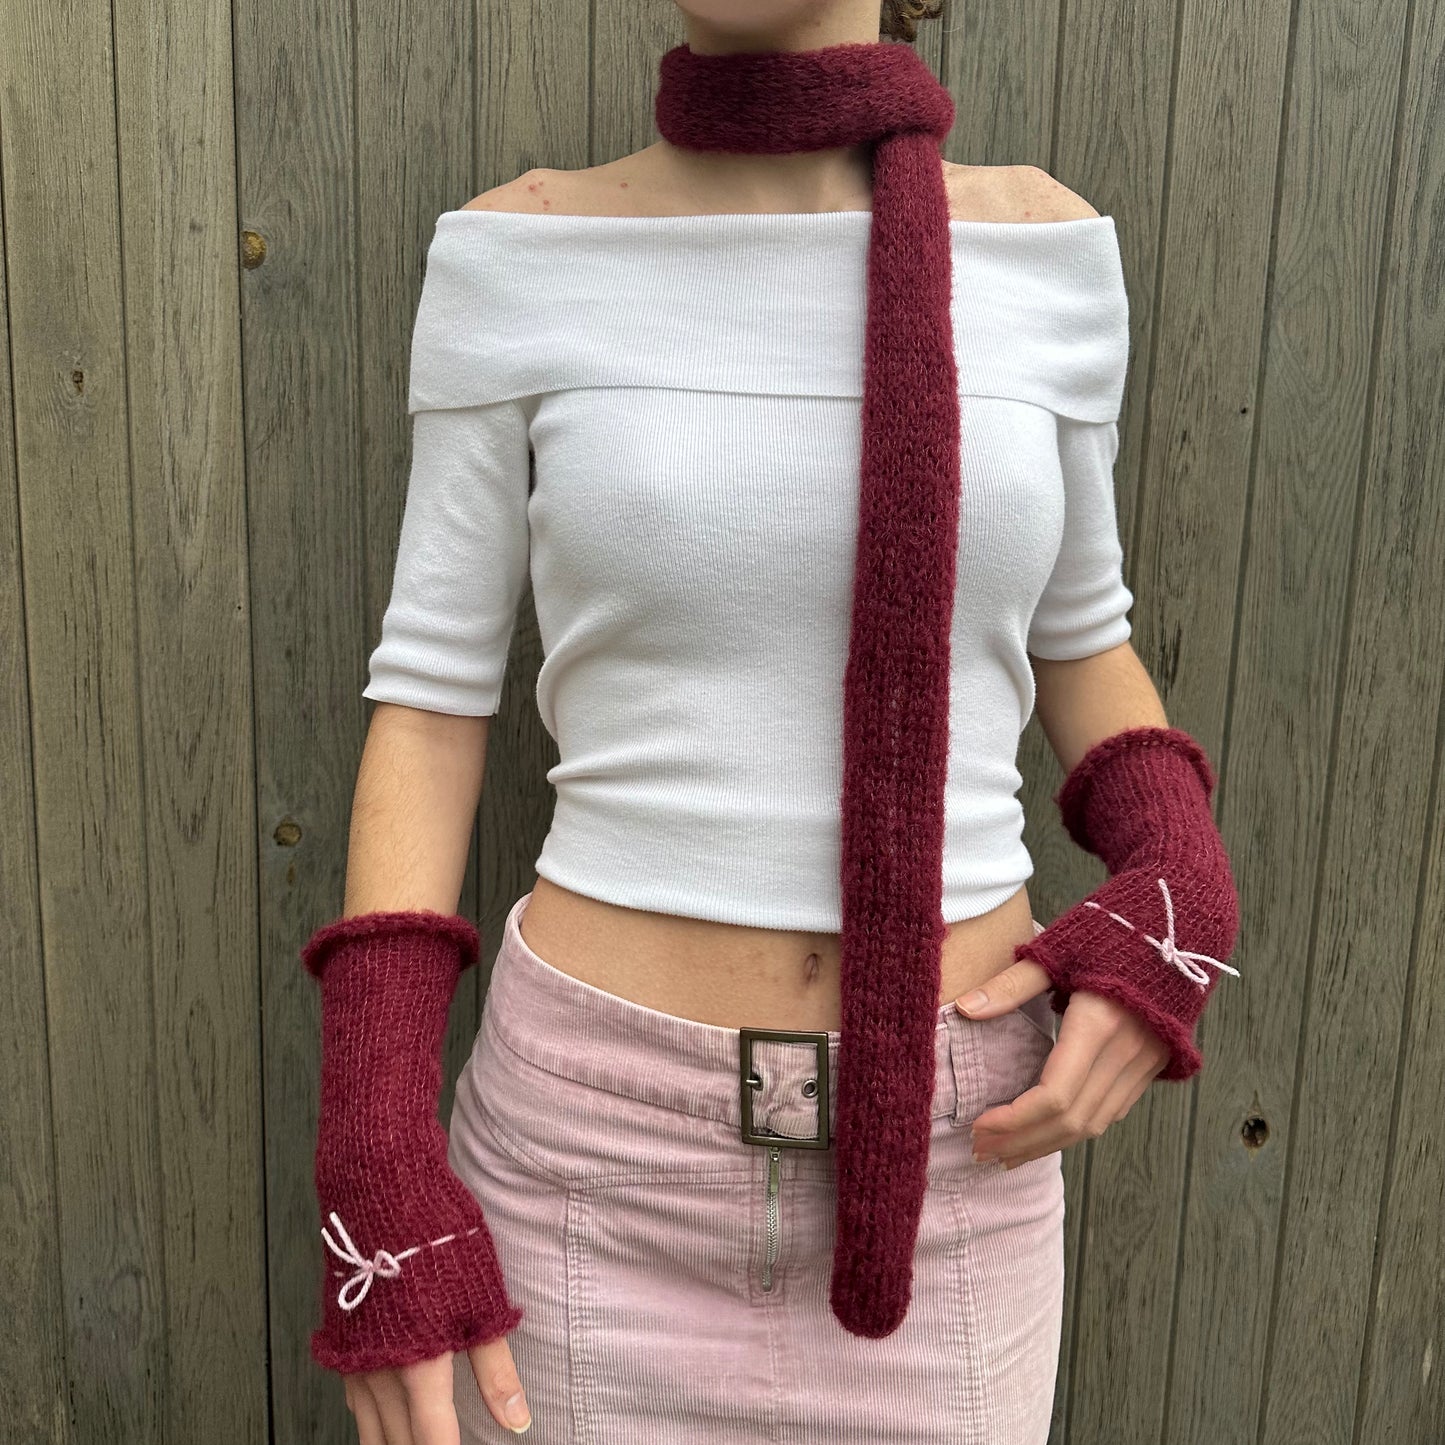 Handmade knitted mohair skinny scarf in burgundy